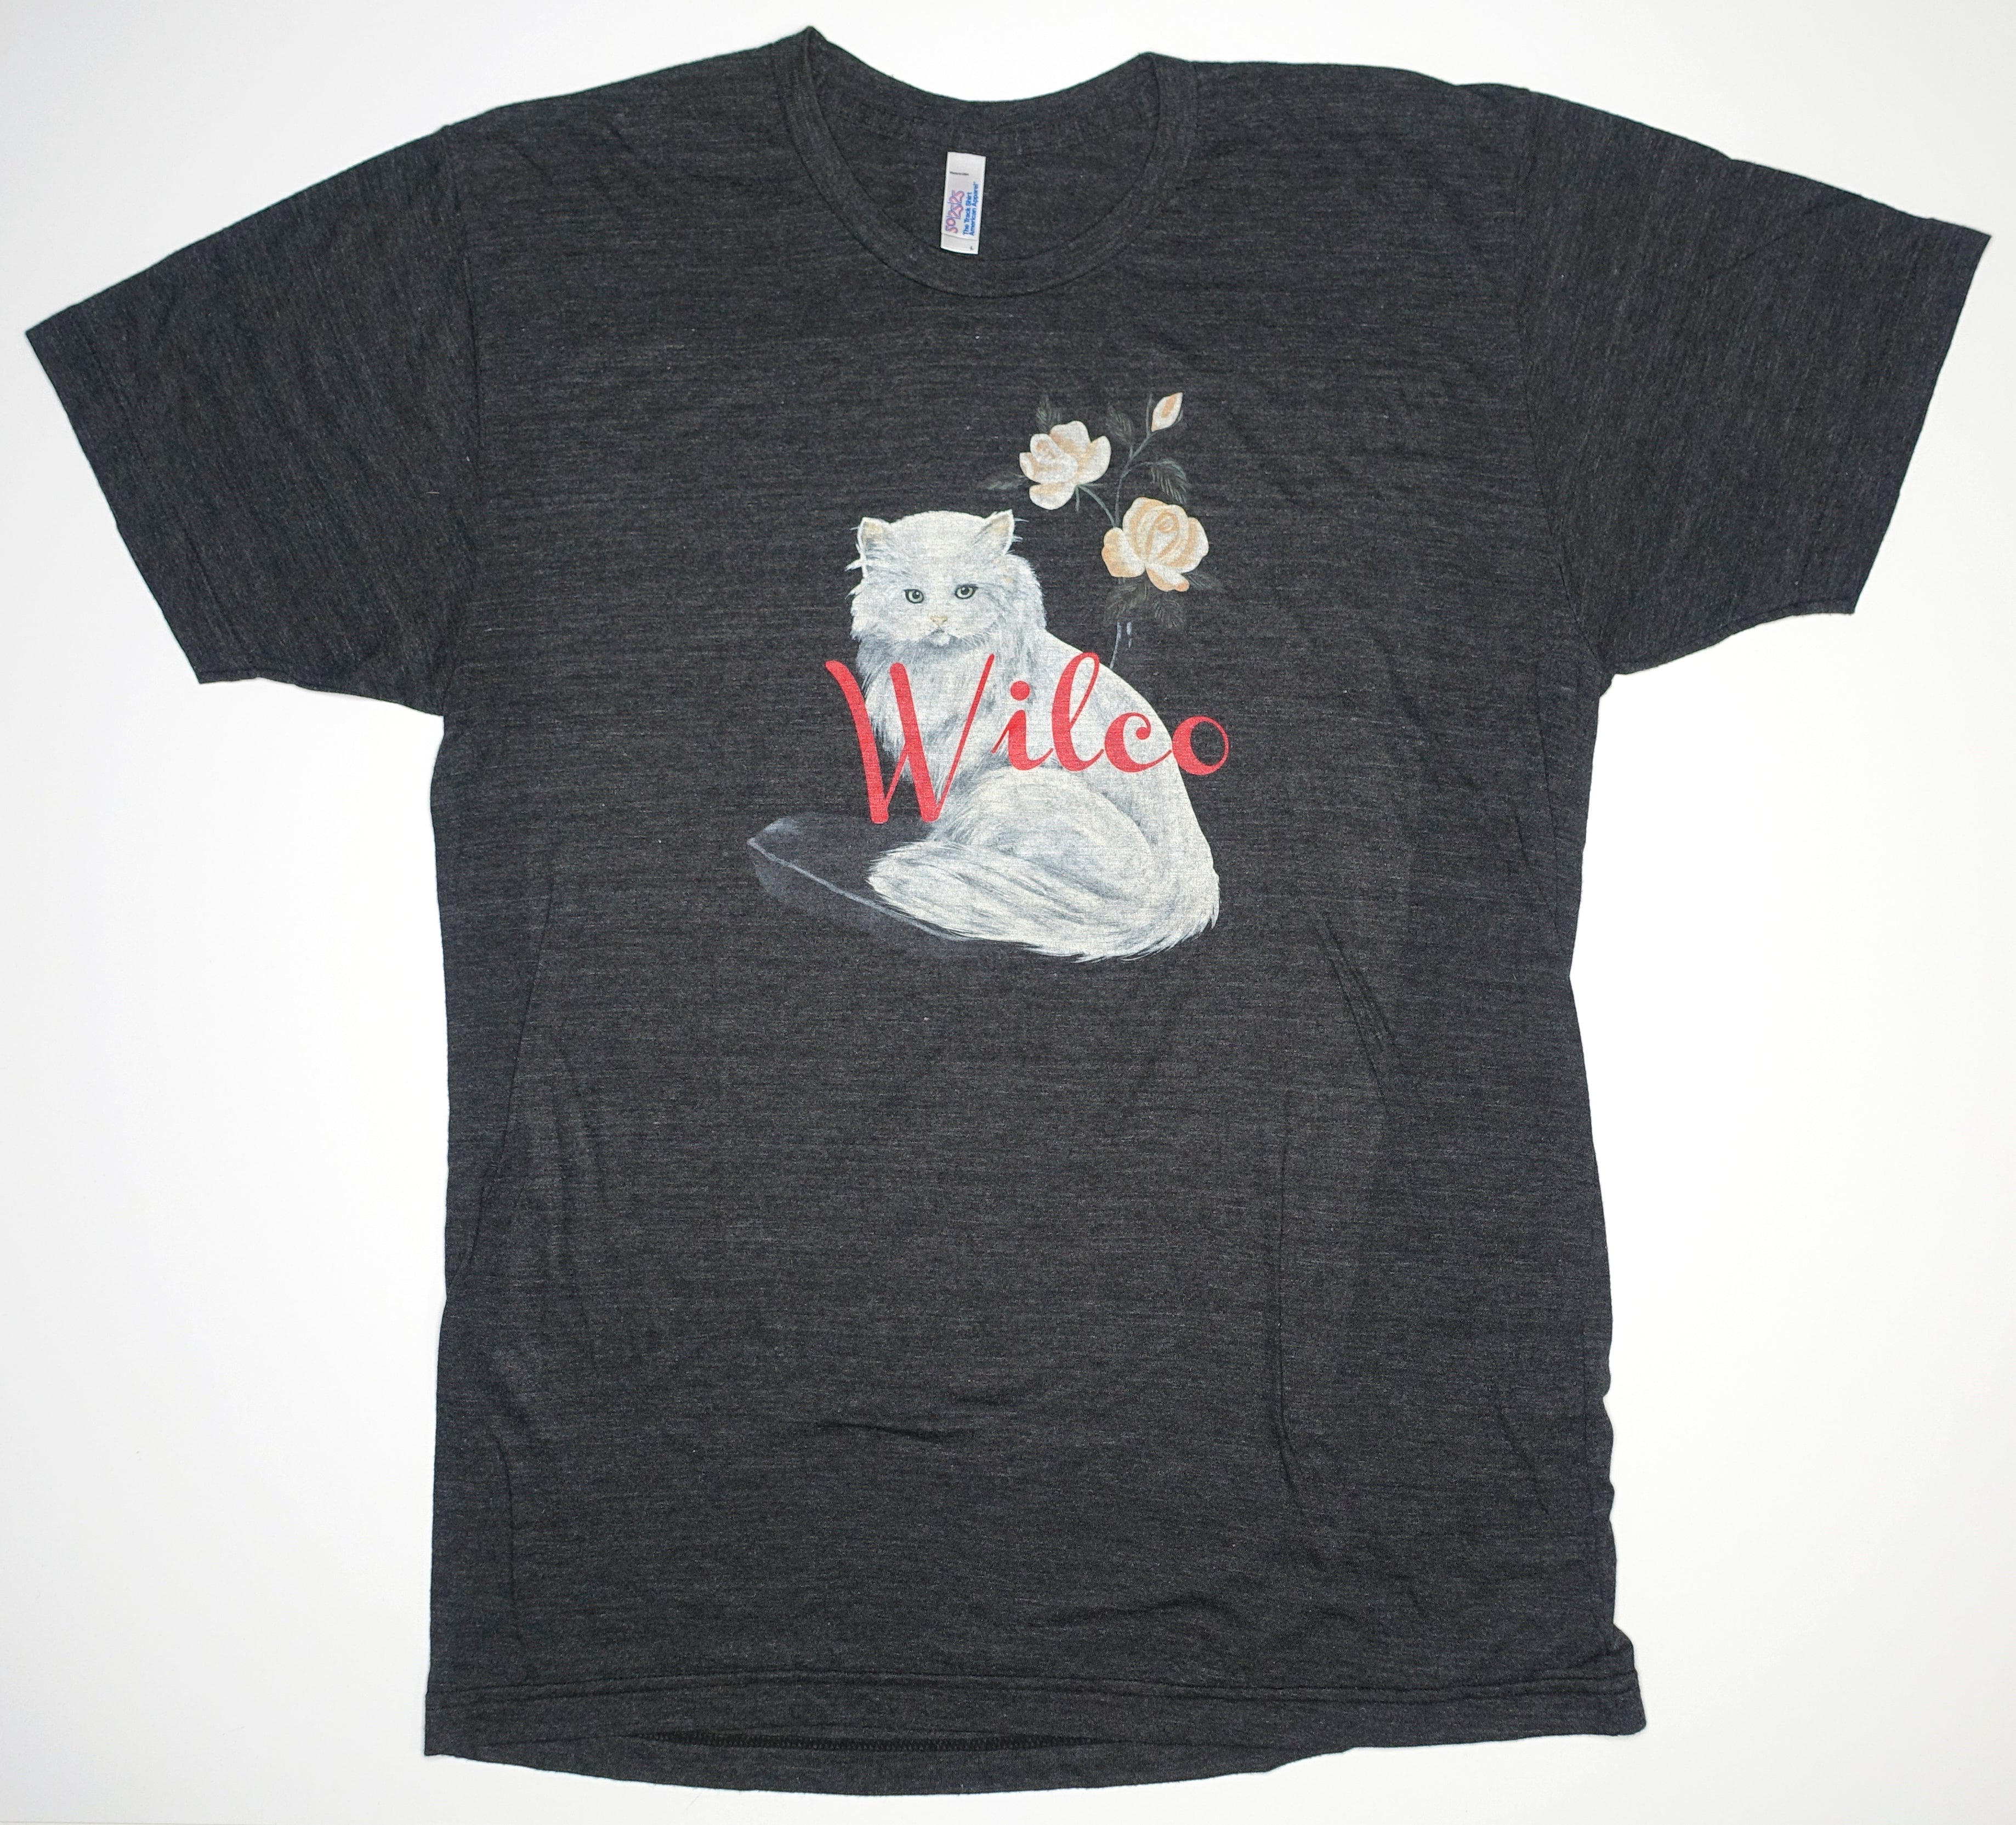 Wilco ‎– Star Wars 2015 Tour Shirt Size Large